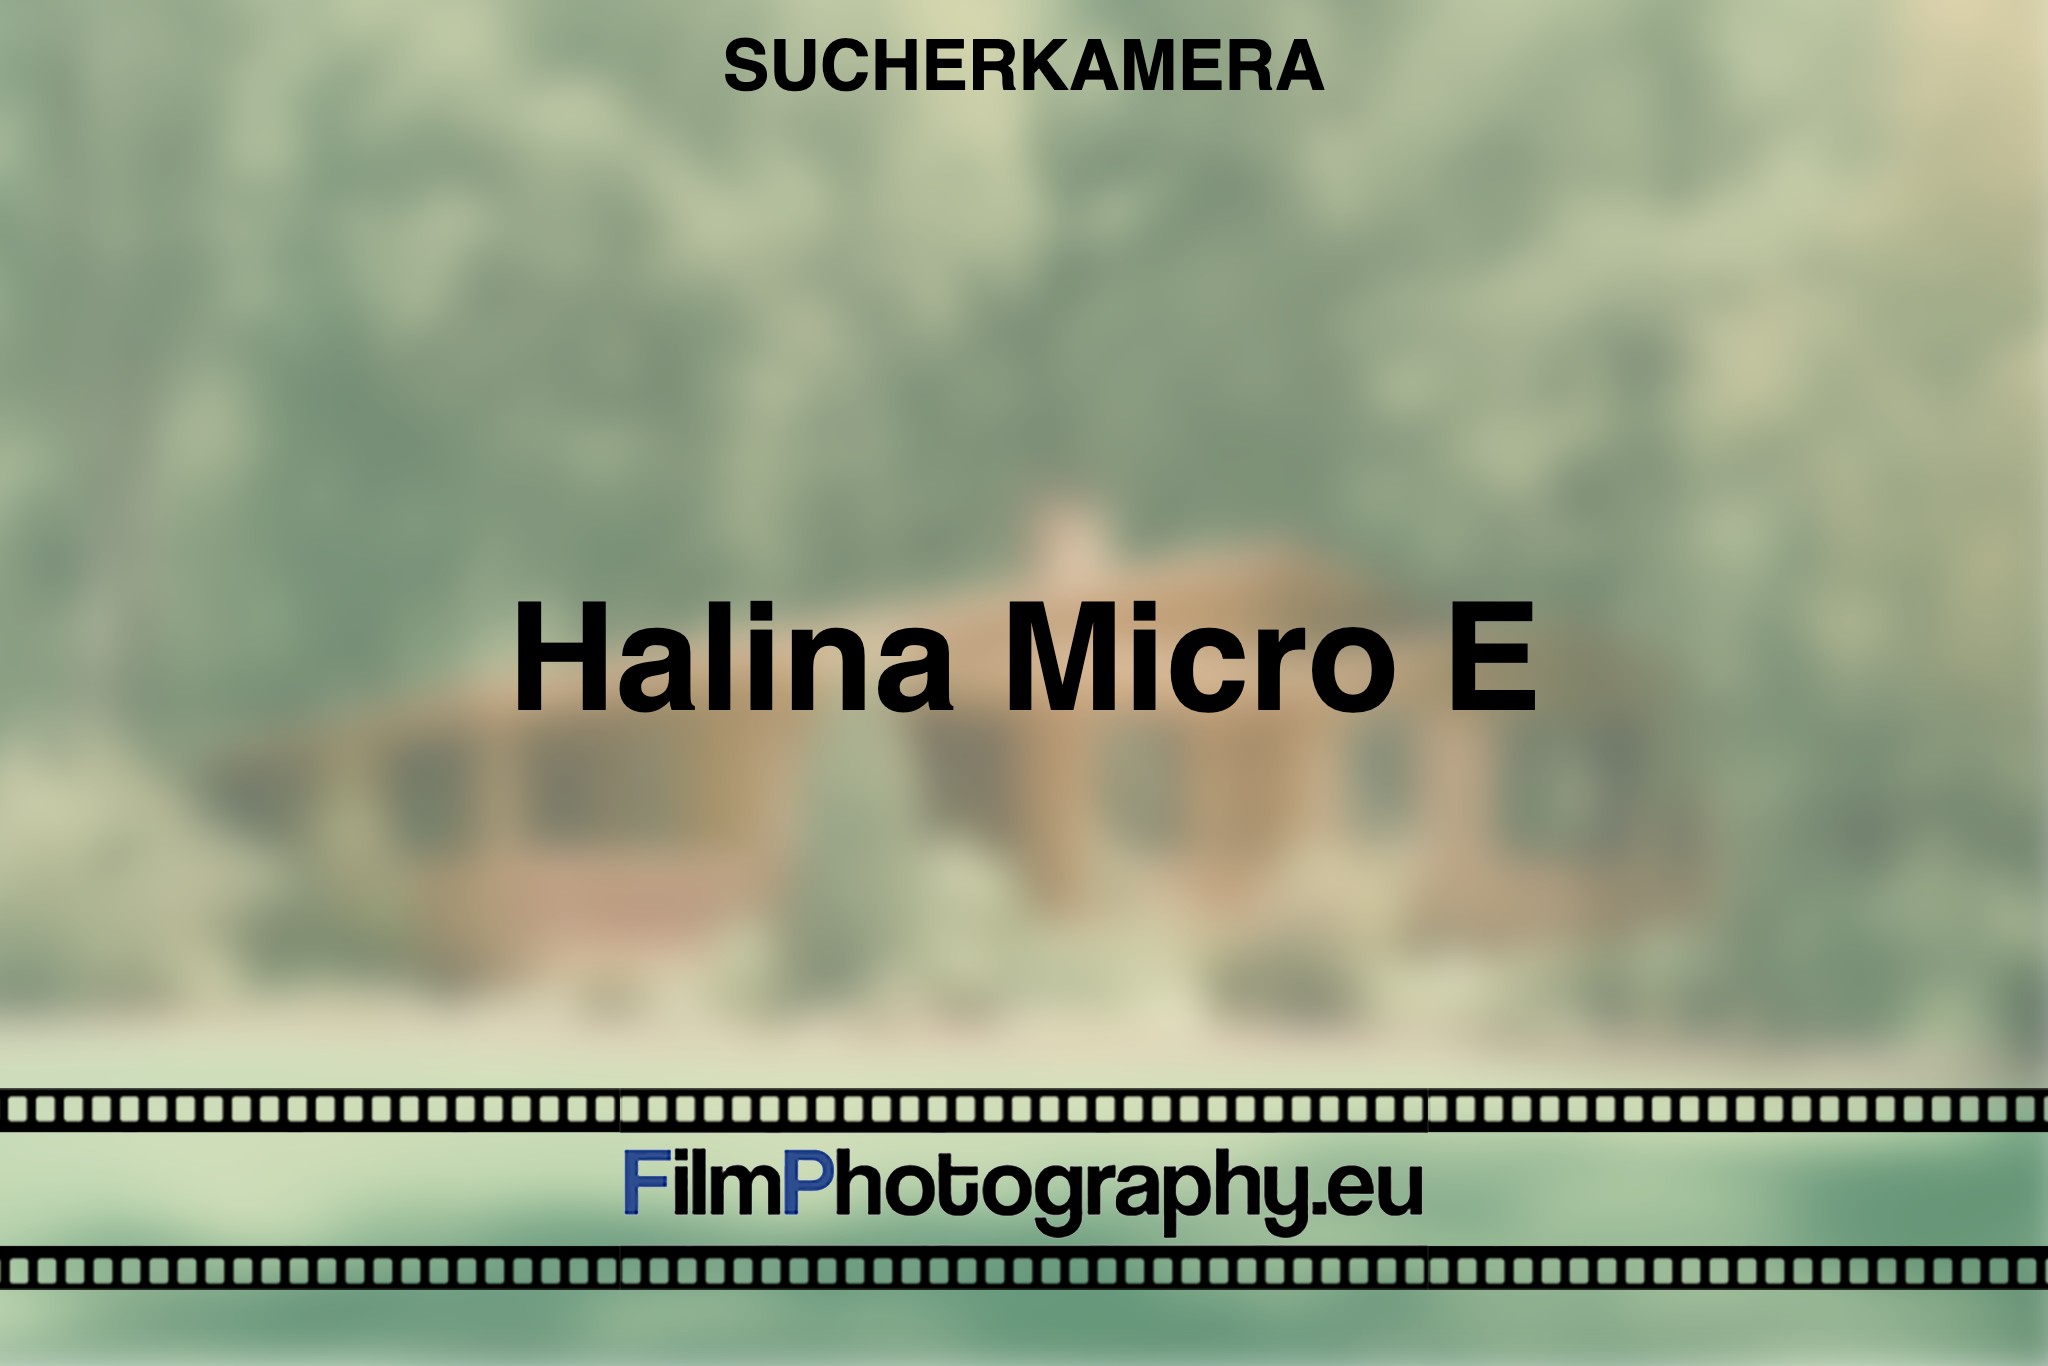 halina-micro-e-sucherkamera-bnv